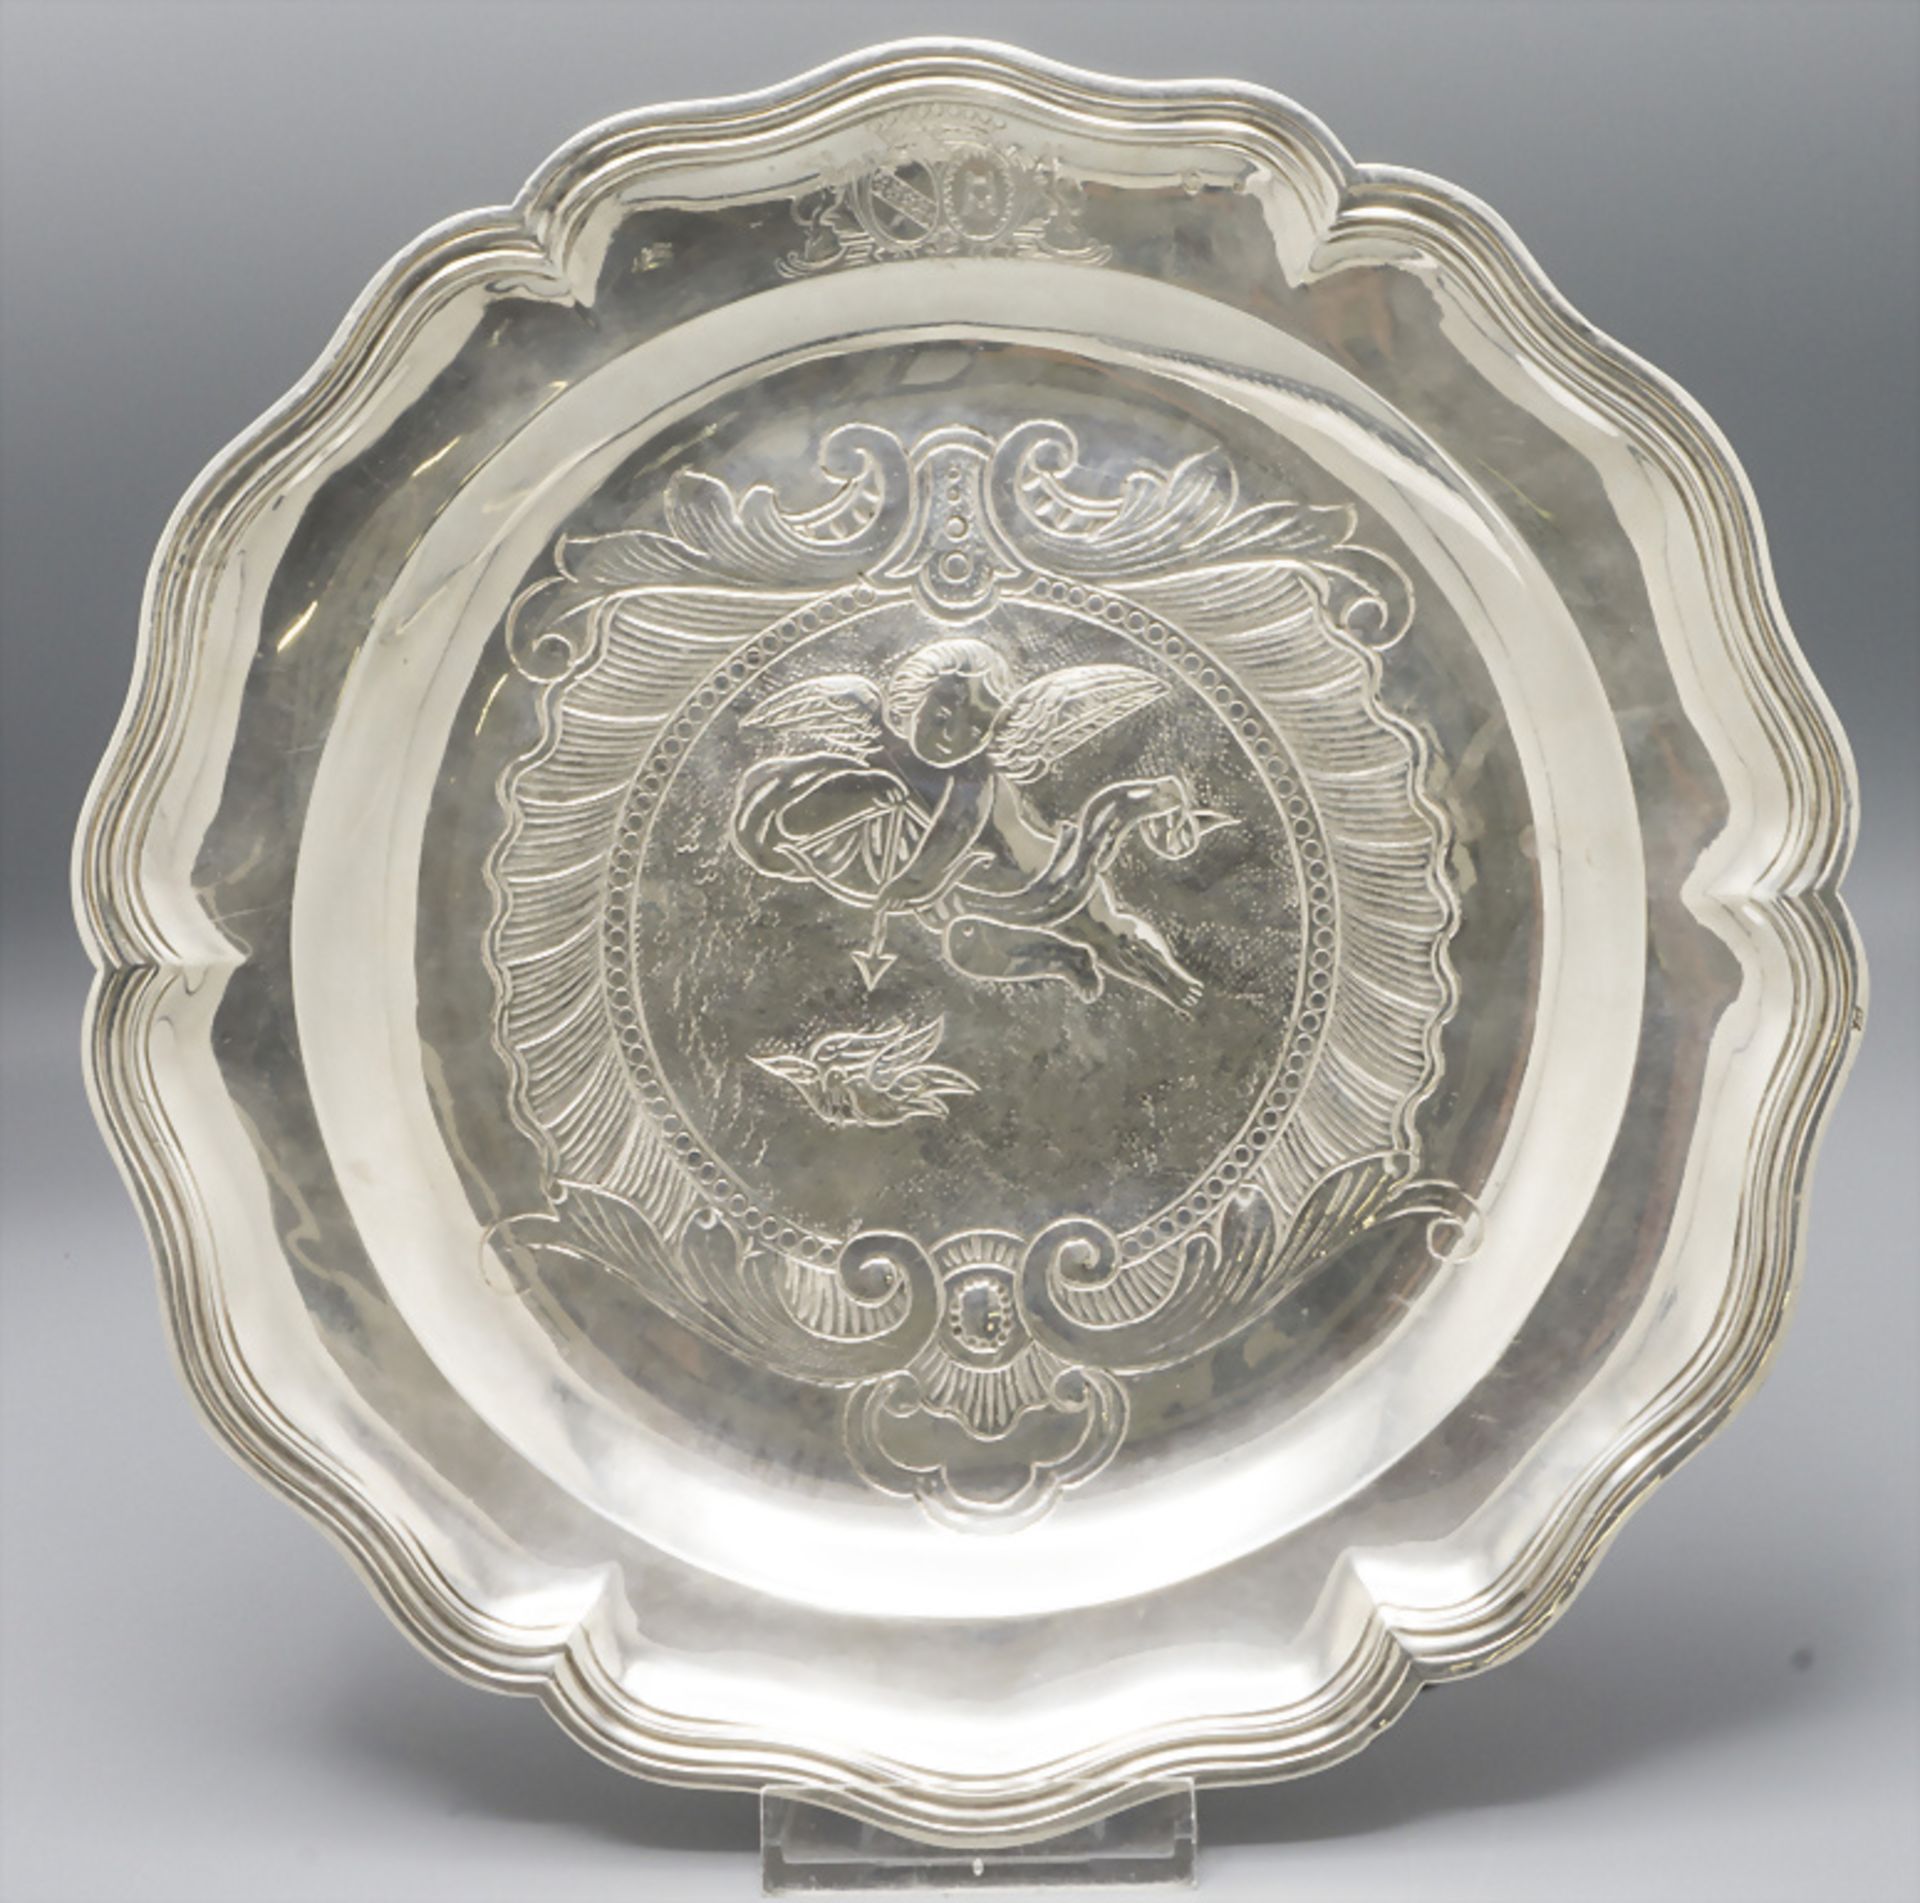 Allianzteller / A silver alliance plate, Claude Genu, Paris, 1744-1750